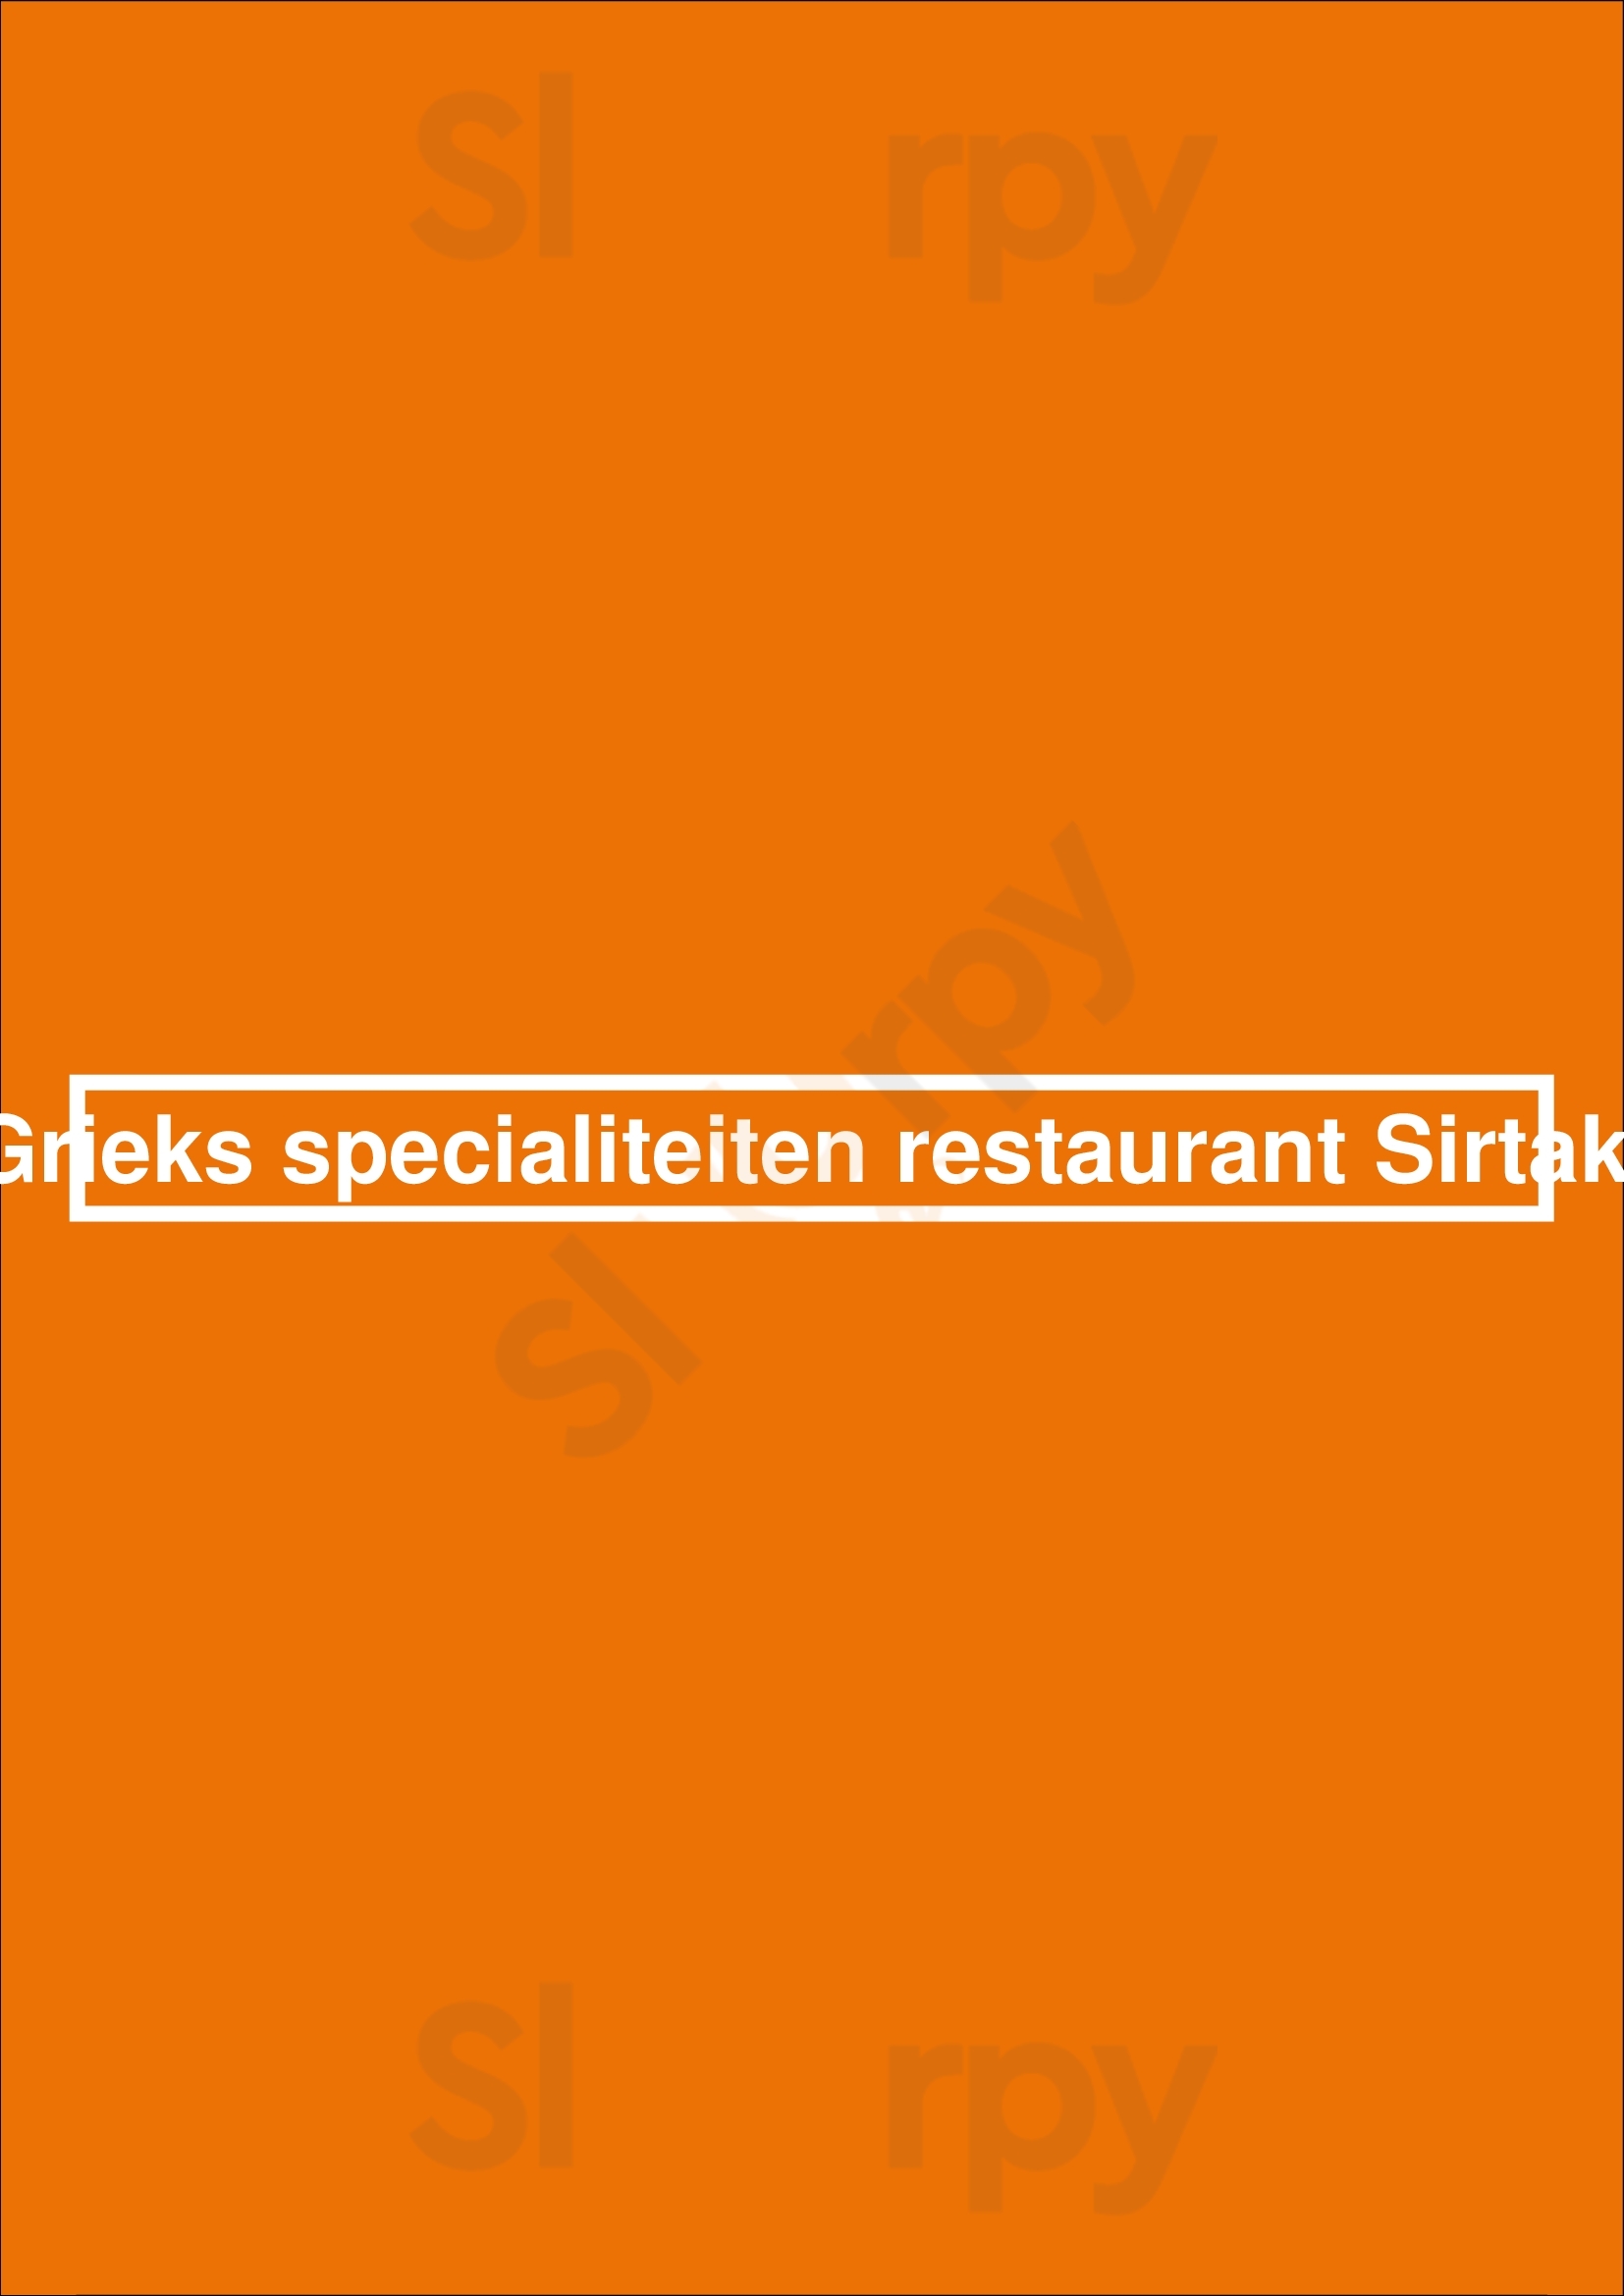 Grieks Specialiteiten Restaurant Sirtaki Kampen Menu - 1